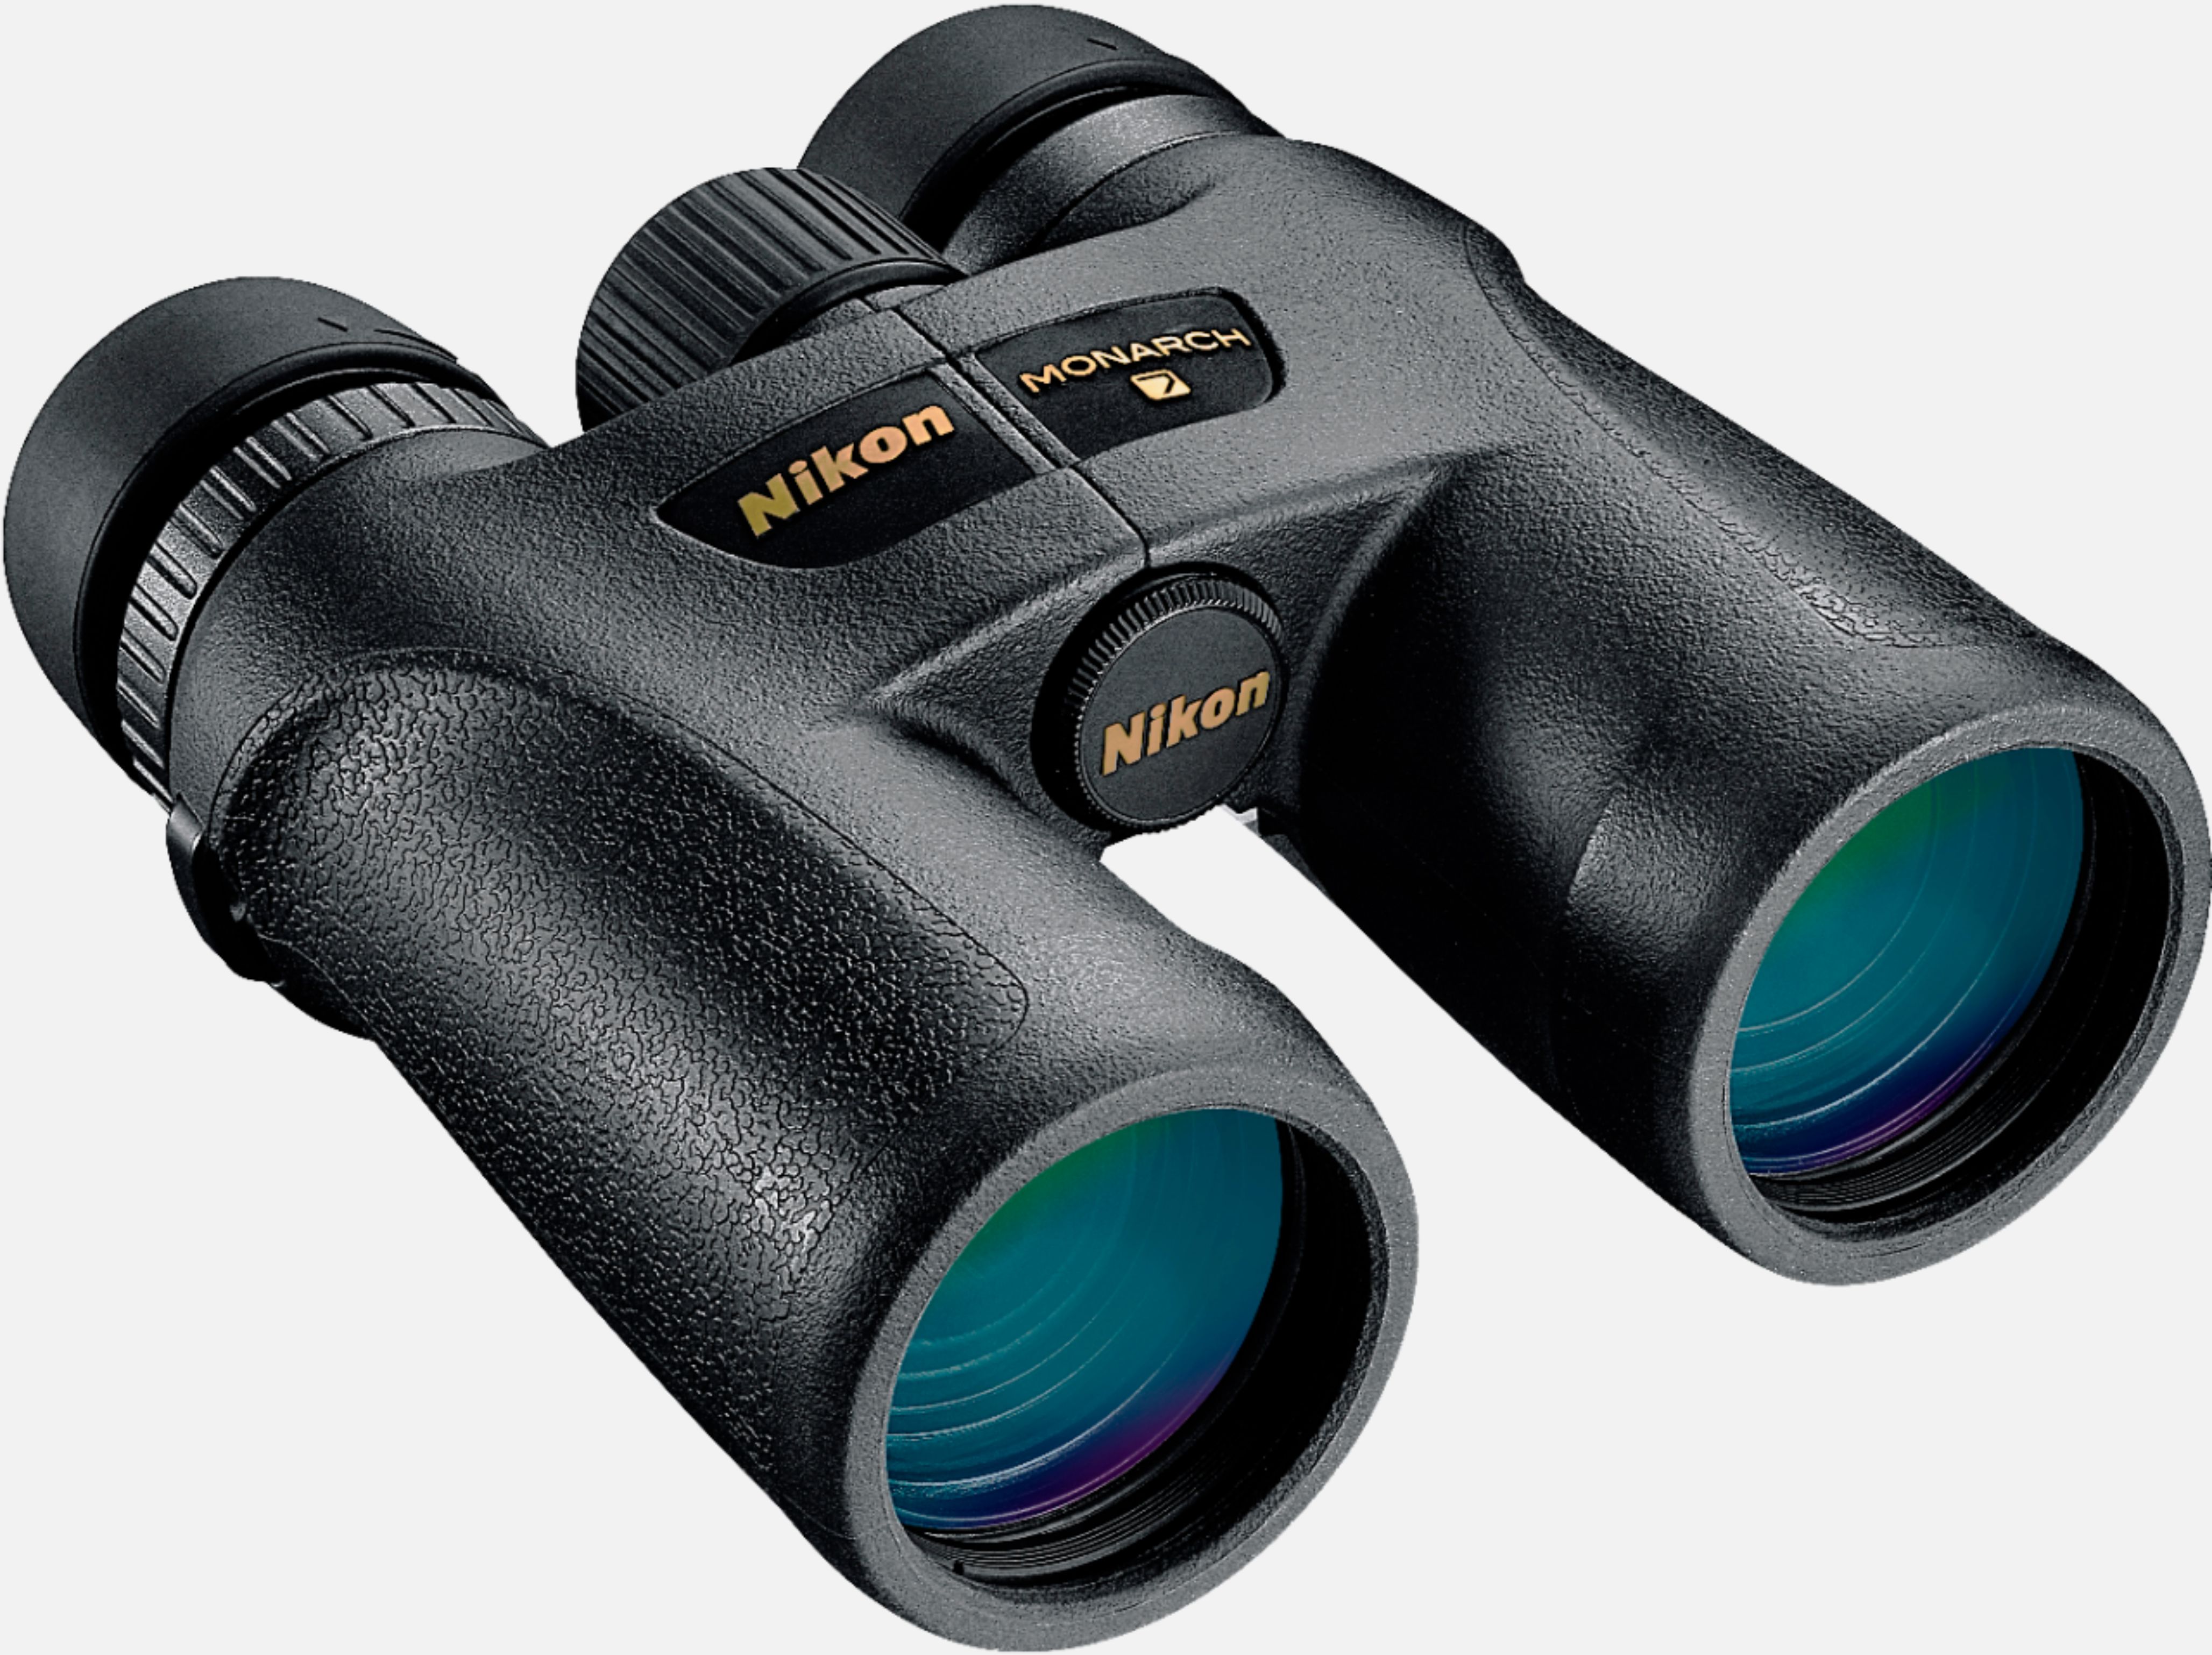 Angle View: Nikon - Monarch 7 10x42 Binoculars - Black